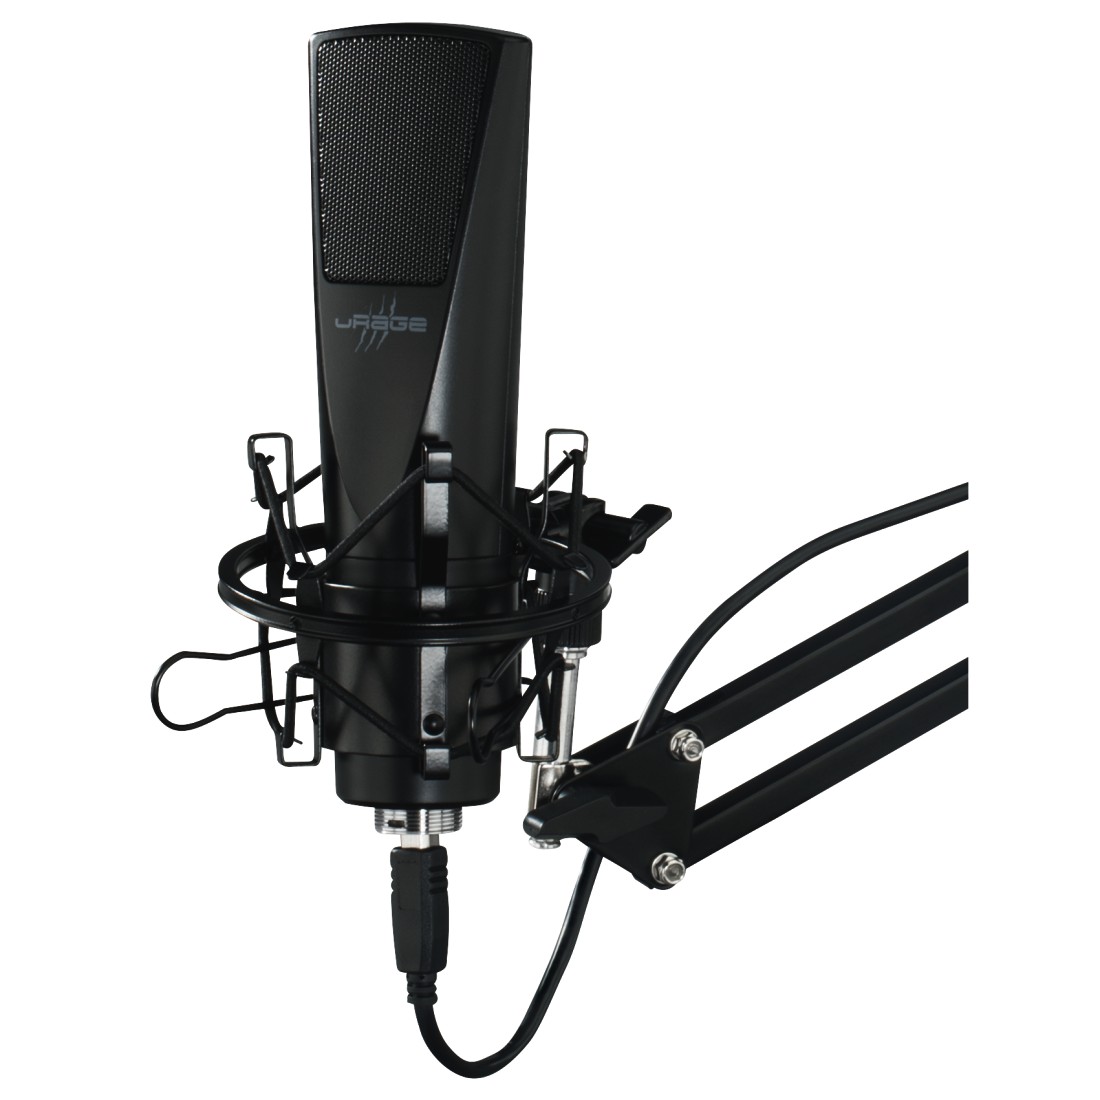 00113794 uRage "MIC xStr3am Revolution" streaming microphone | hama.com